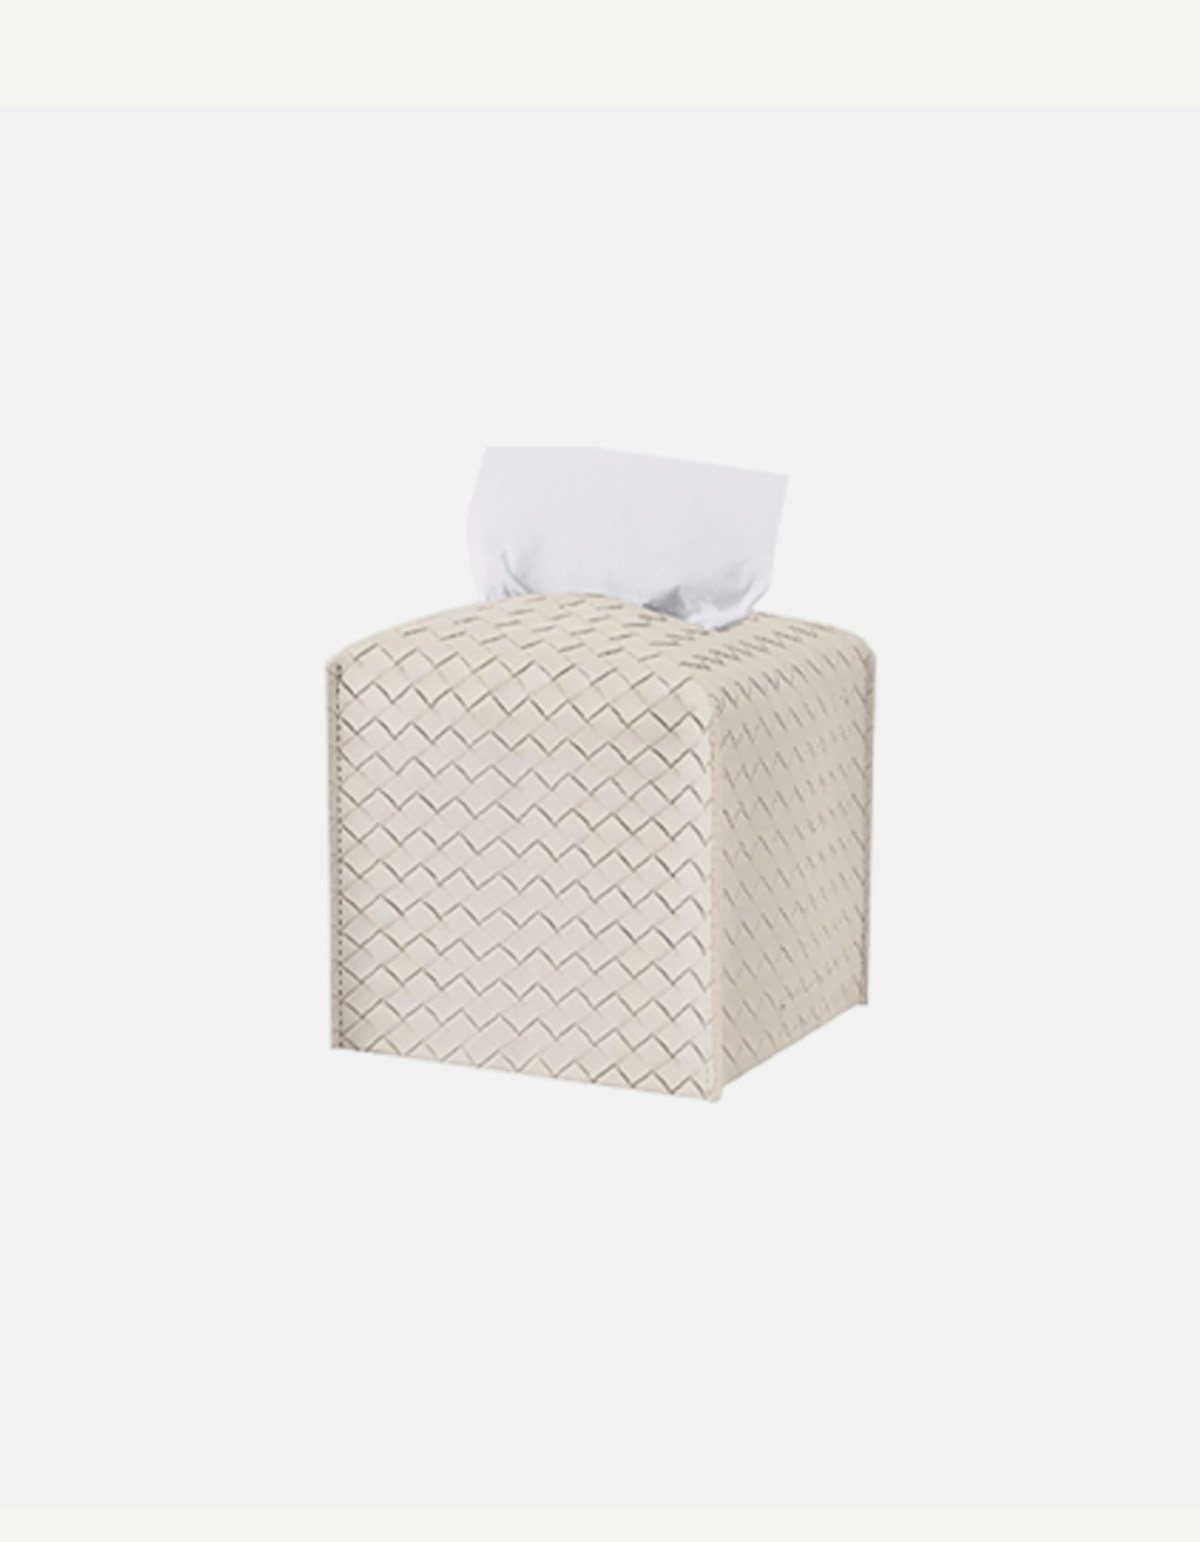 tissue box cover.jpg